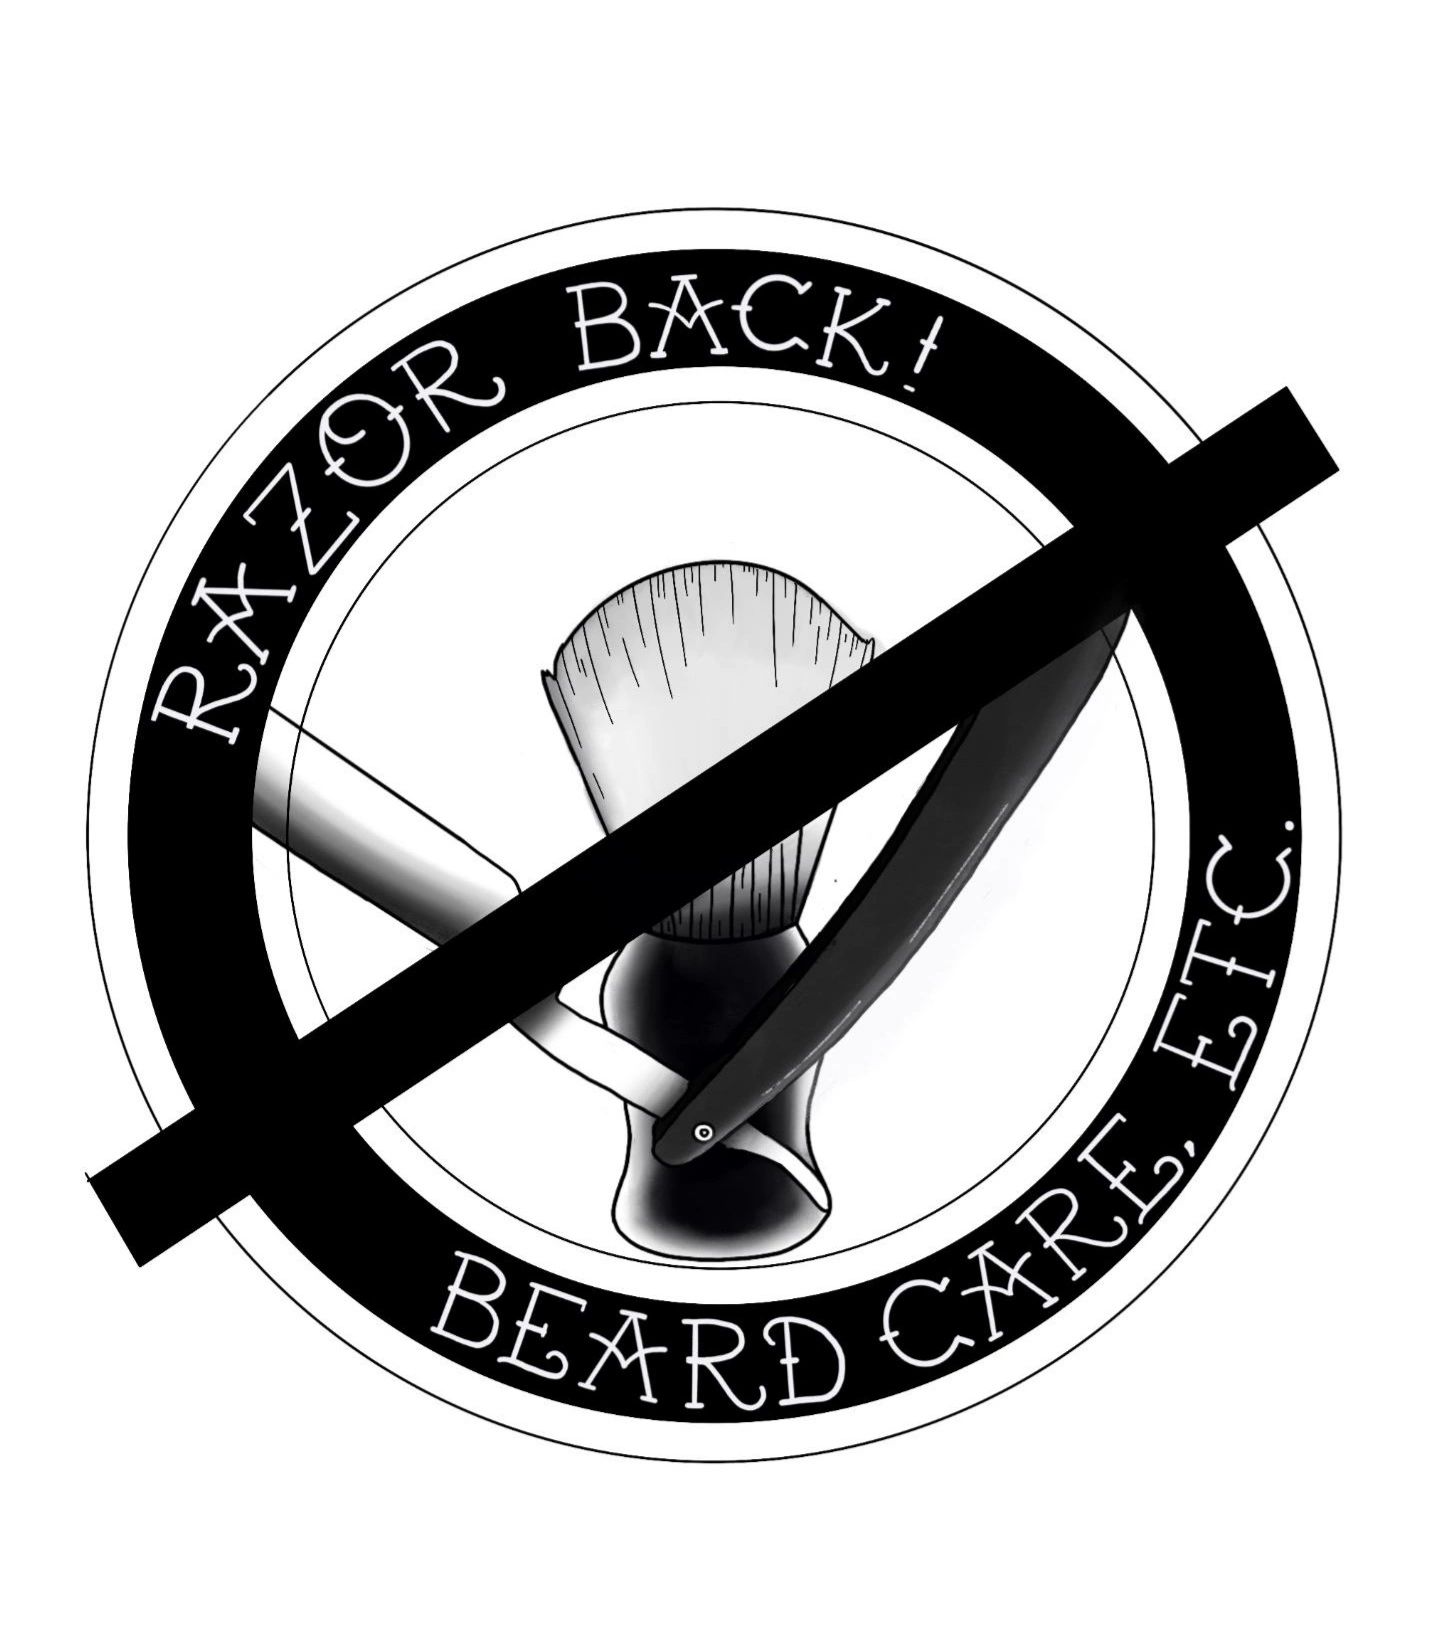 Razor Back Beard Care Logo